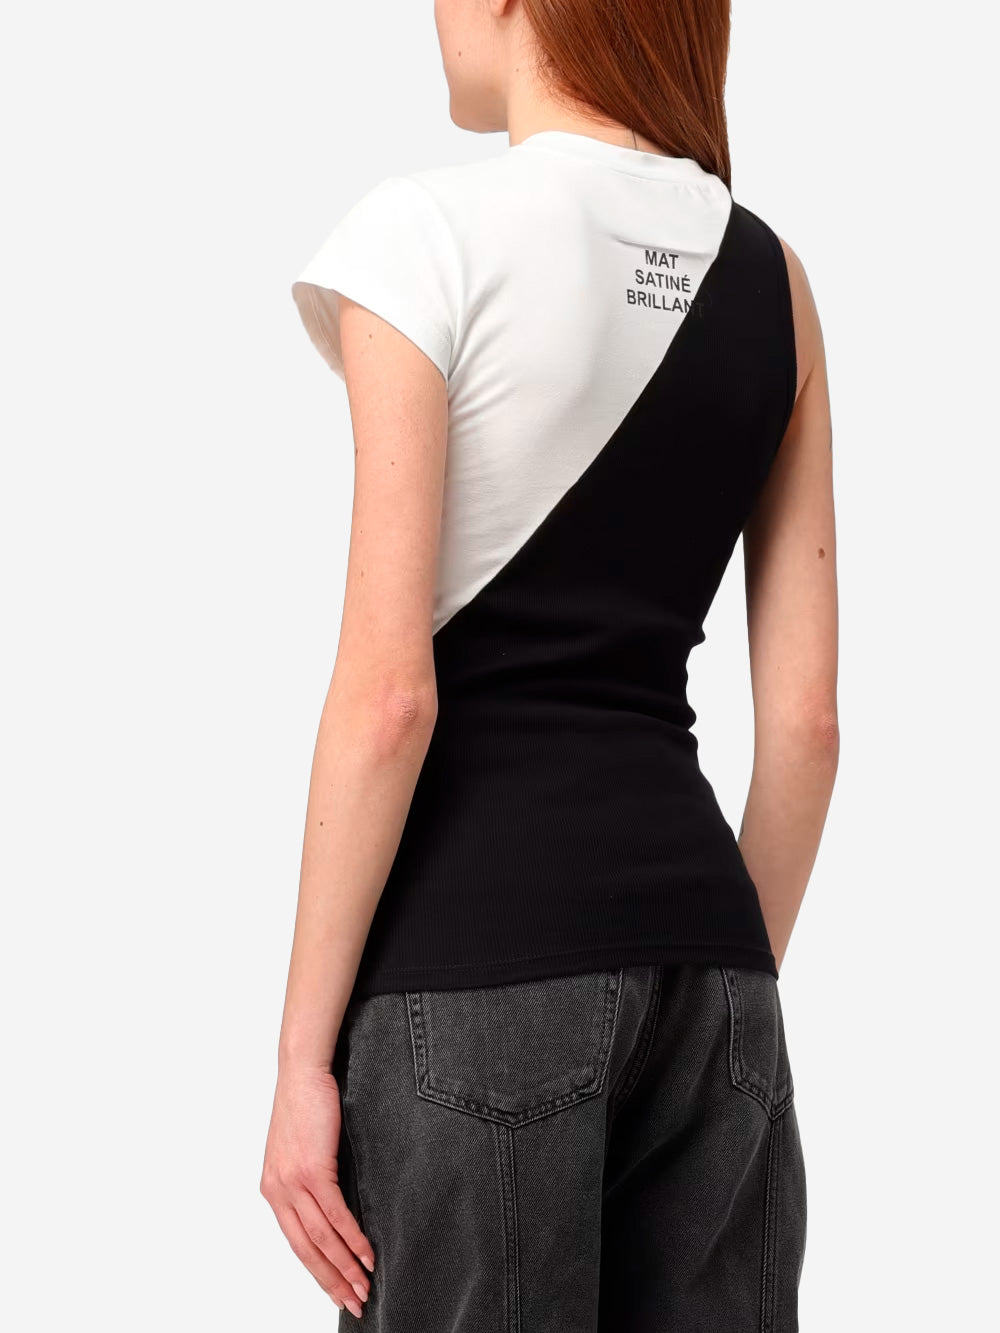 MM6 MAISON MARGIELA T-shirt asimettrica nera e bianca Urbanstaroma